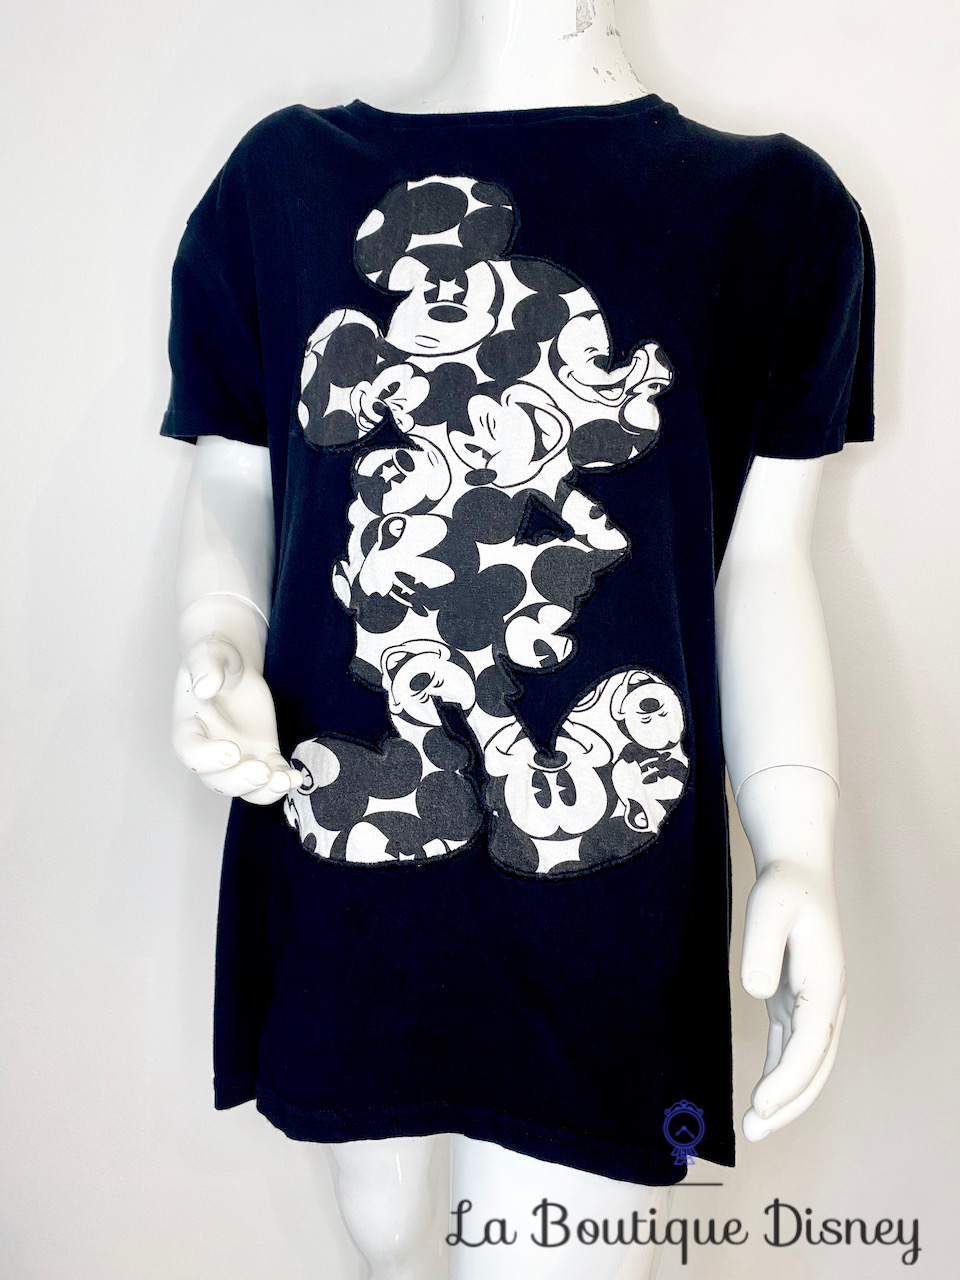 Tee shirt Mickey Mouse noir blanc Disneyland Paris Disney taille S silhouette